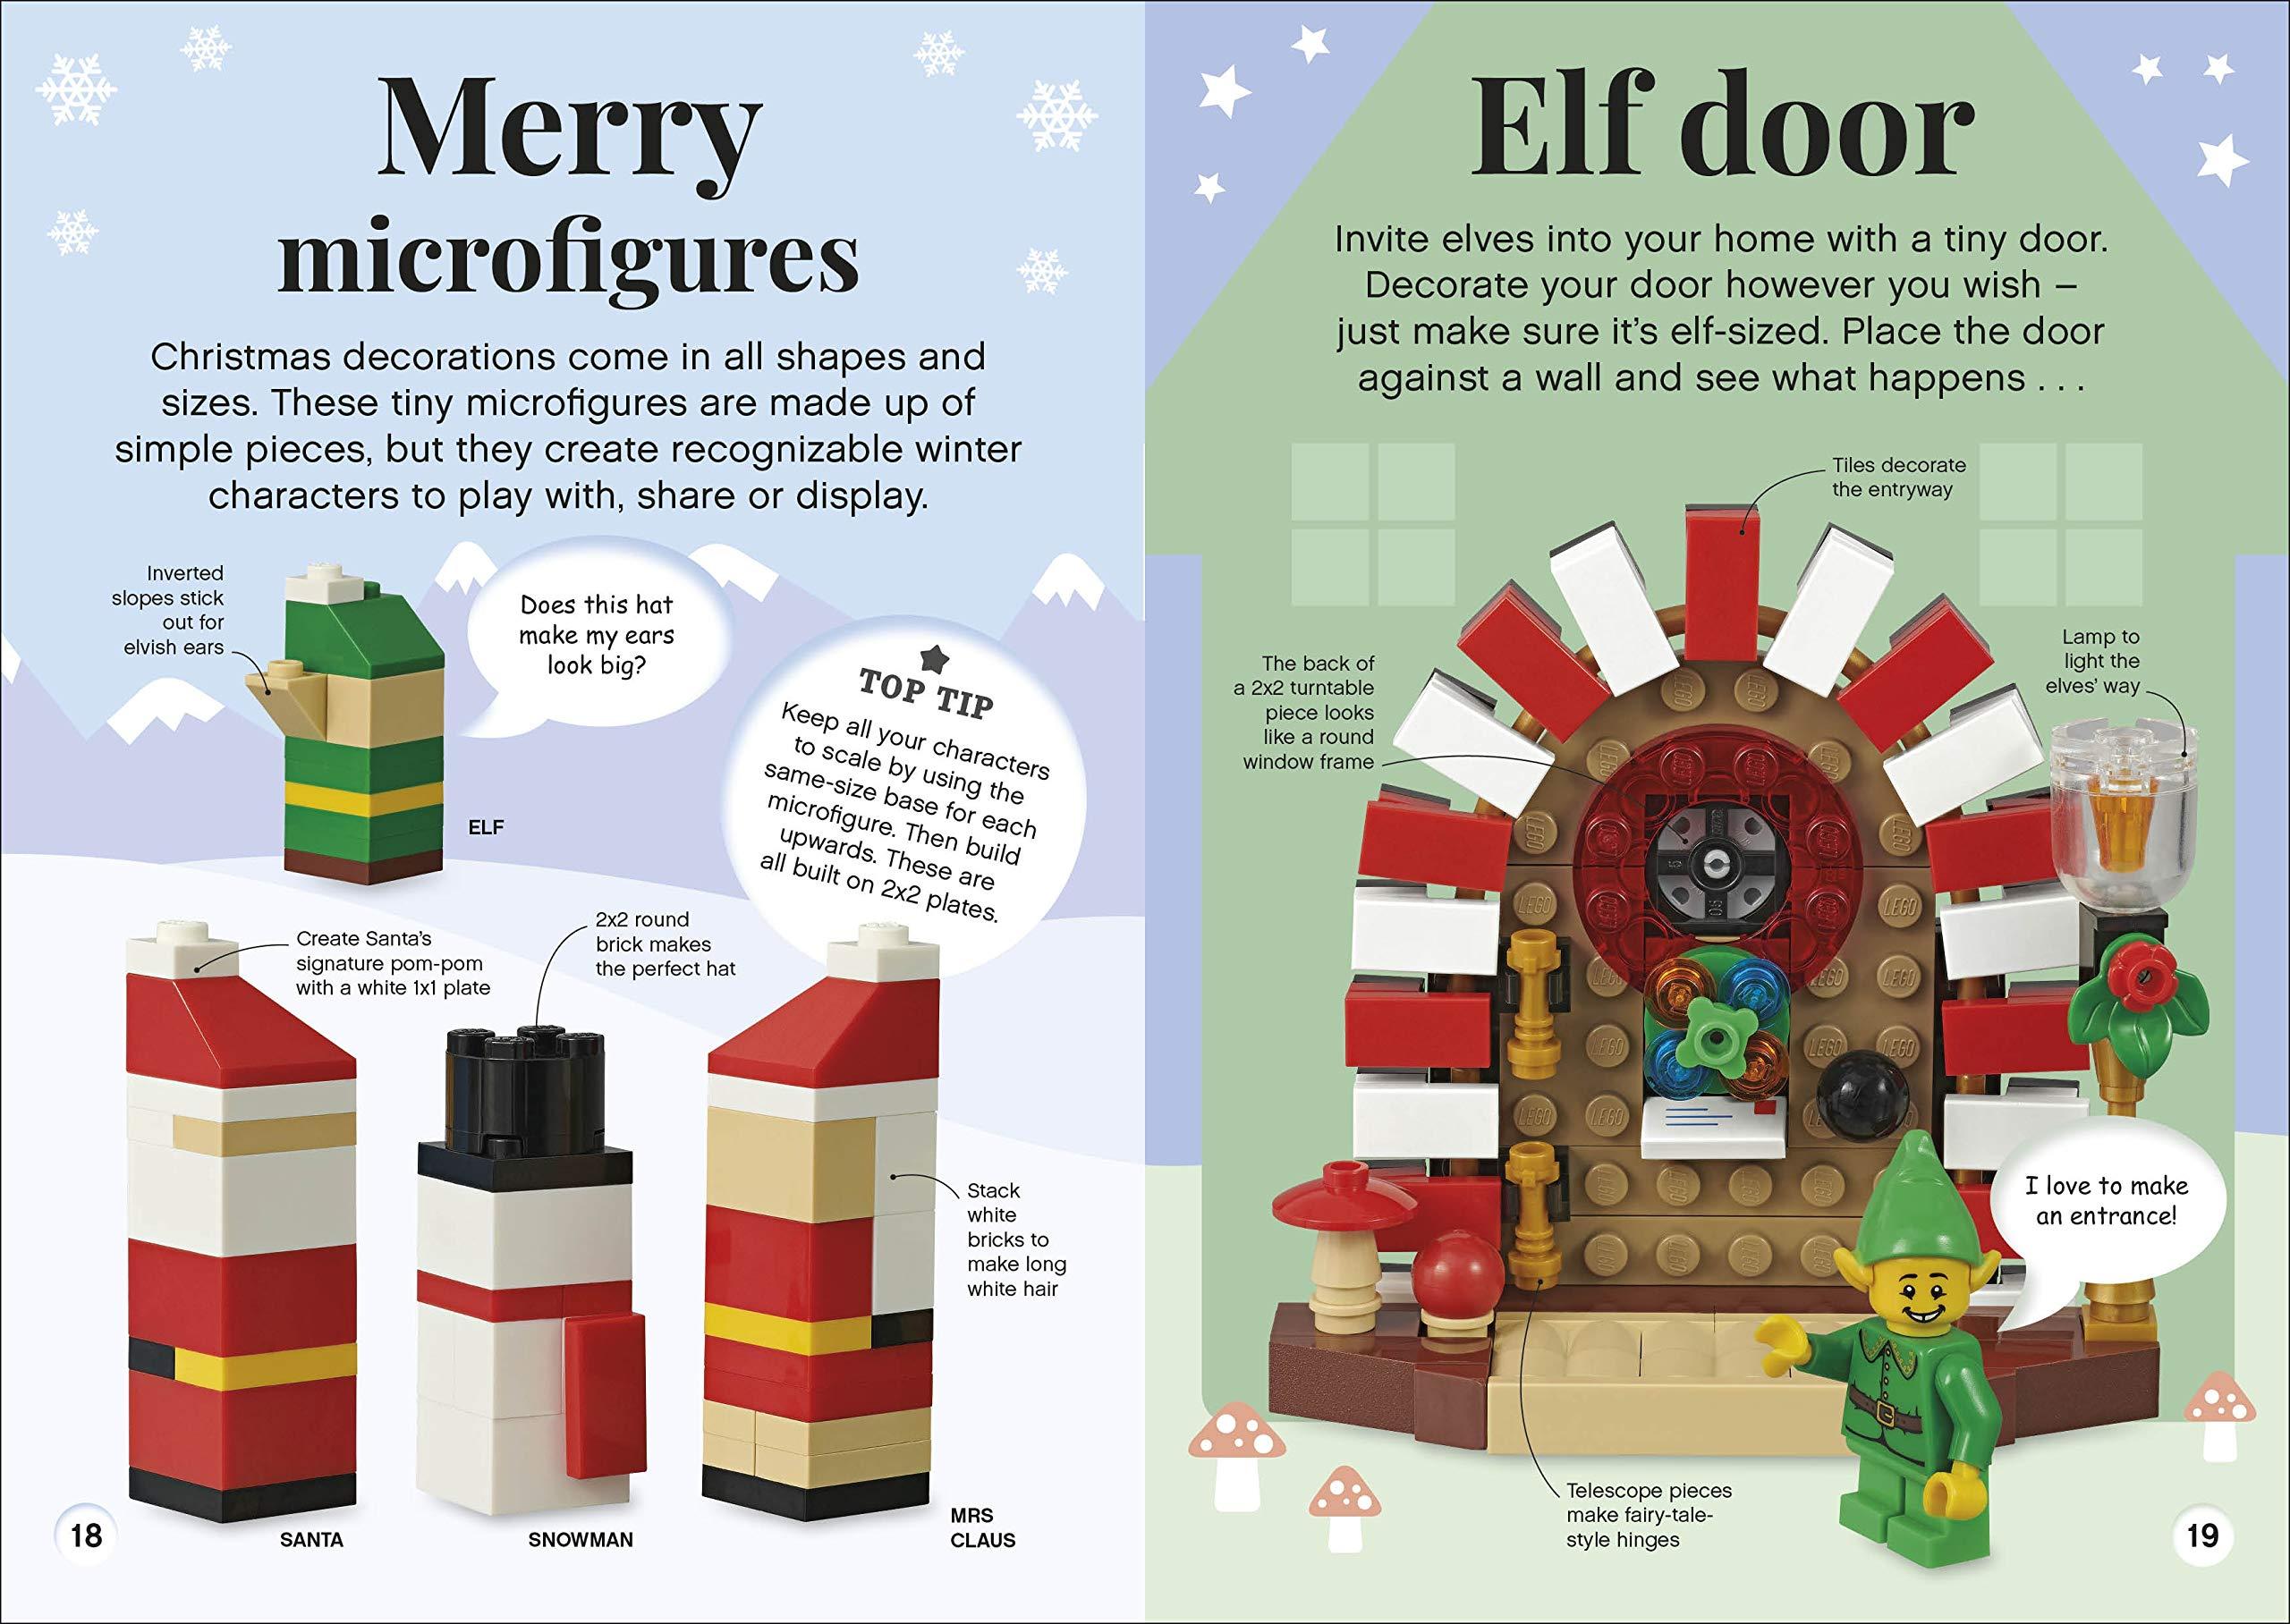 LEGO Christmas Ideas: With Exclusive Reindeer Mini Model